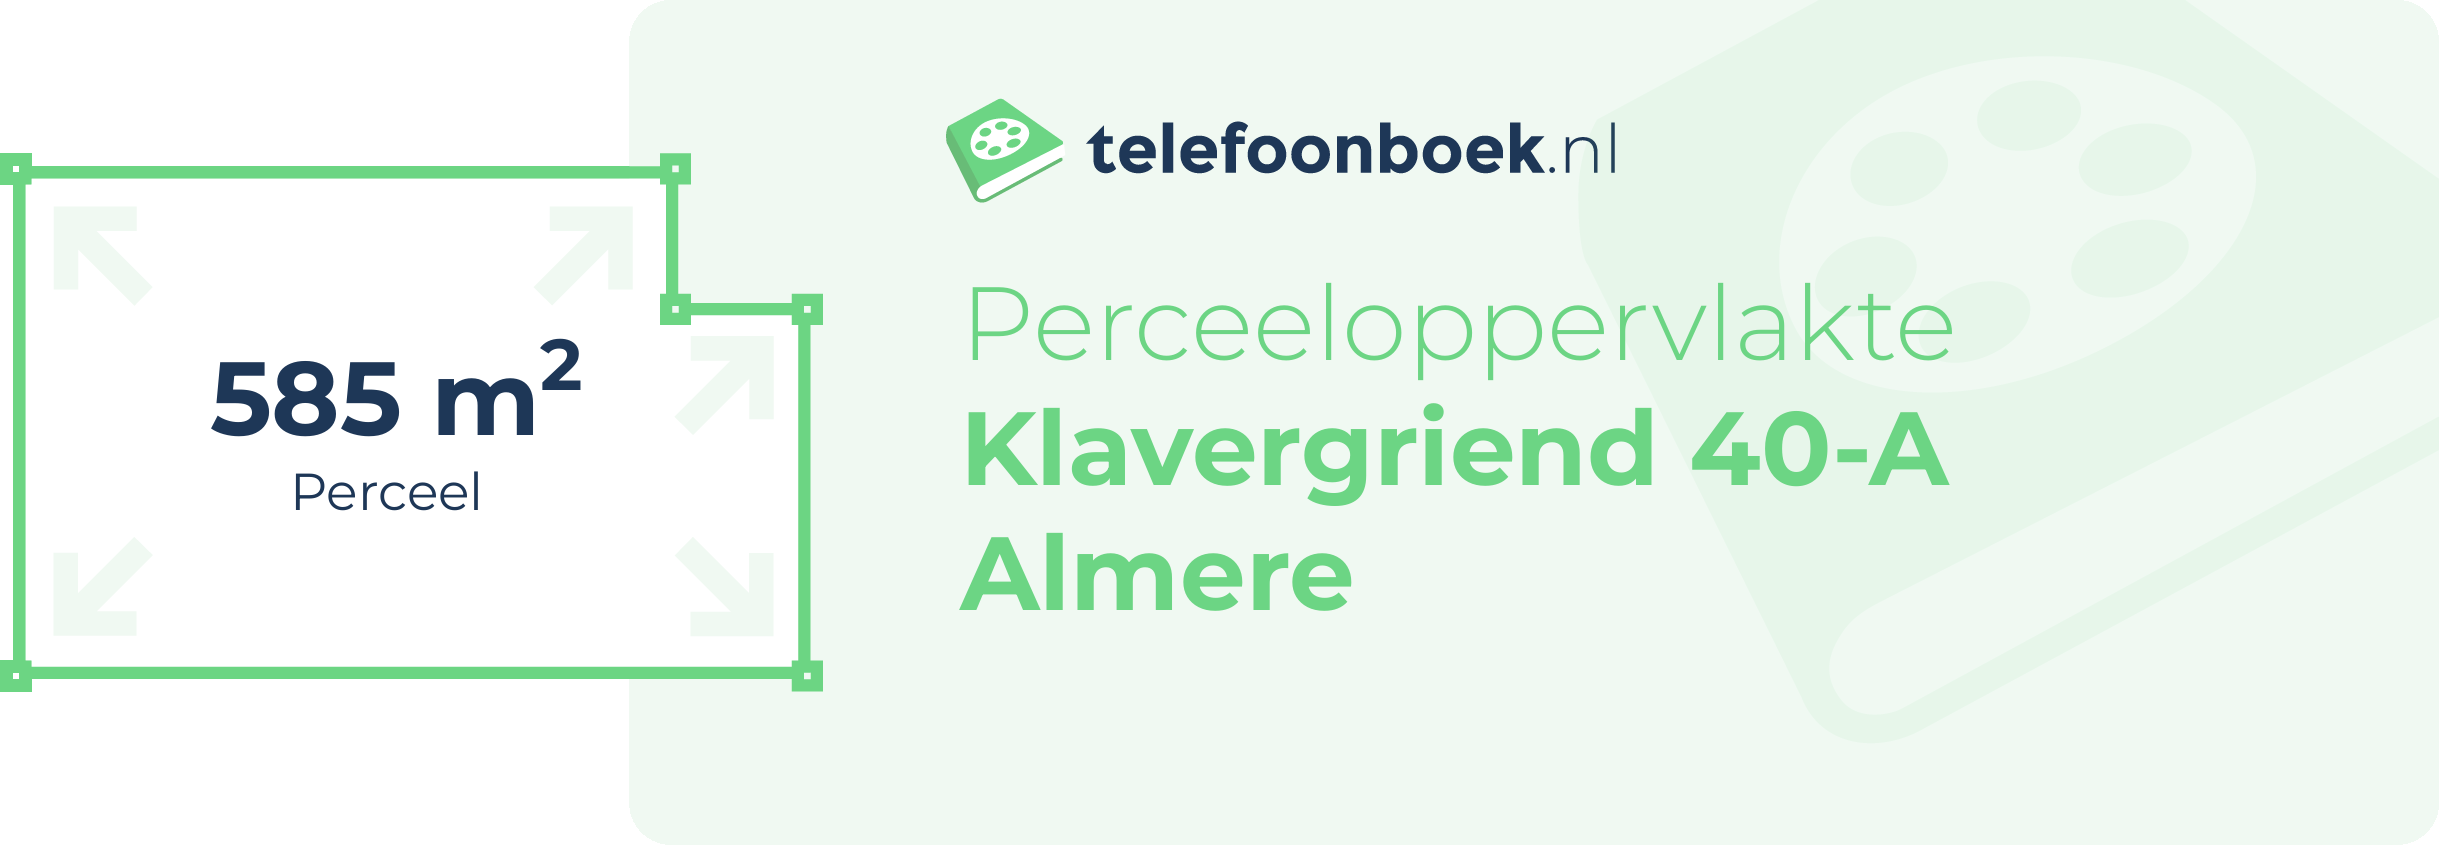 Perceeloppervlakte Klavergriend 40-A Almere